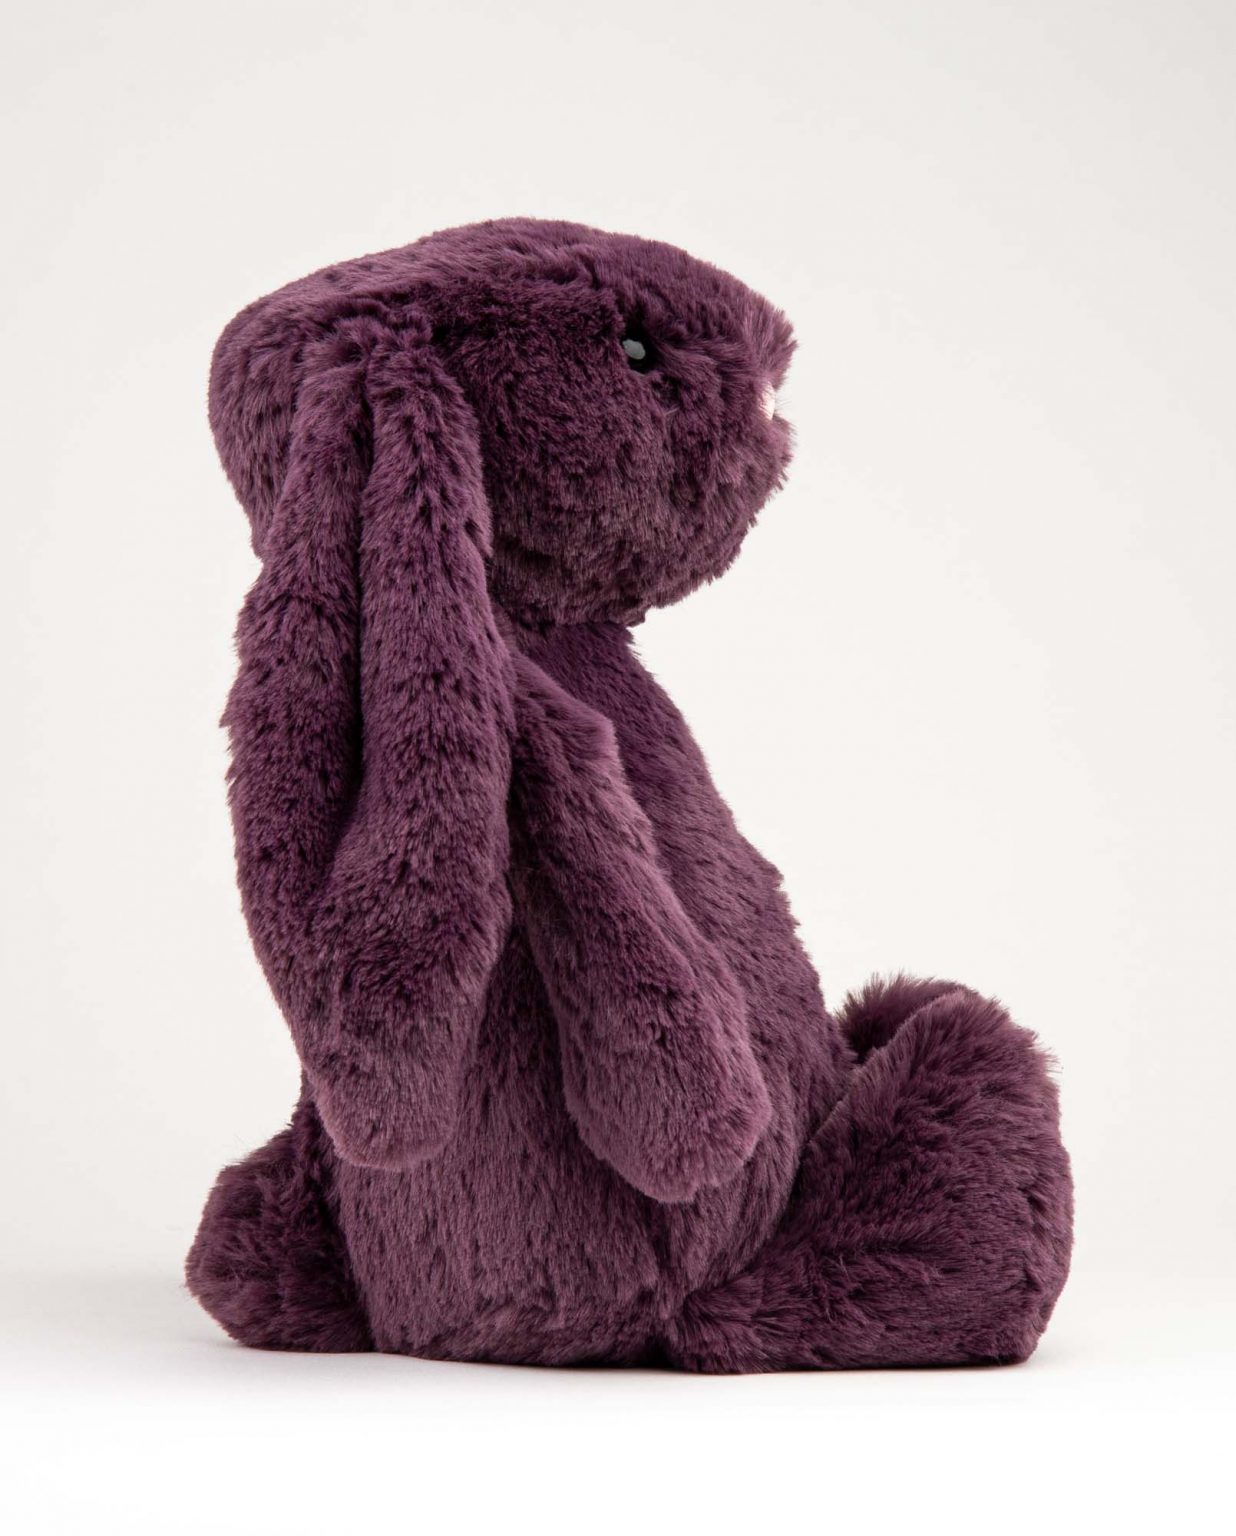 Jellycat Plum Bunny - Send a Cuddly